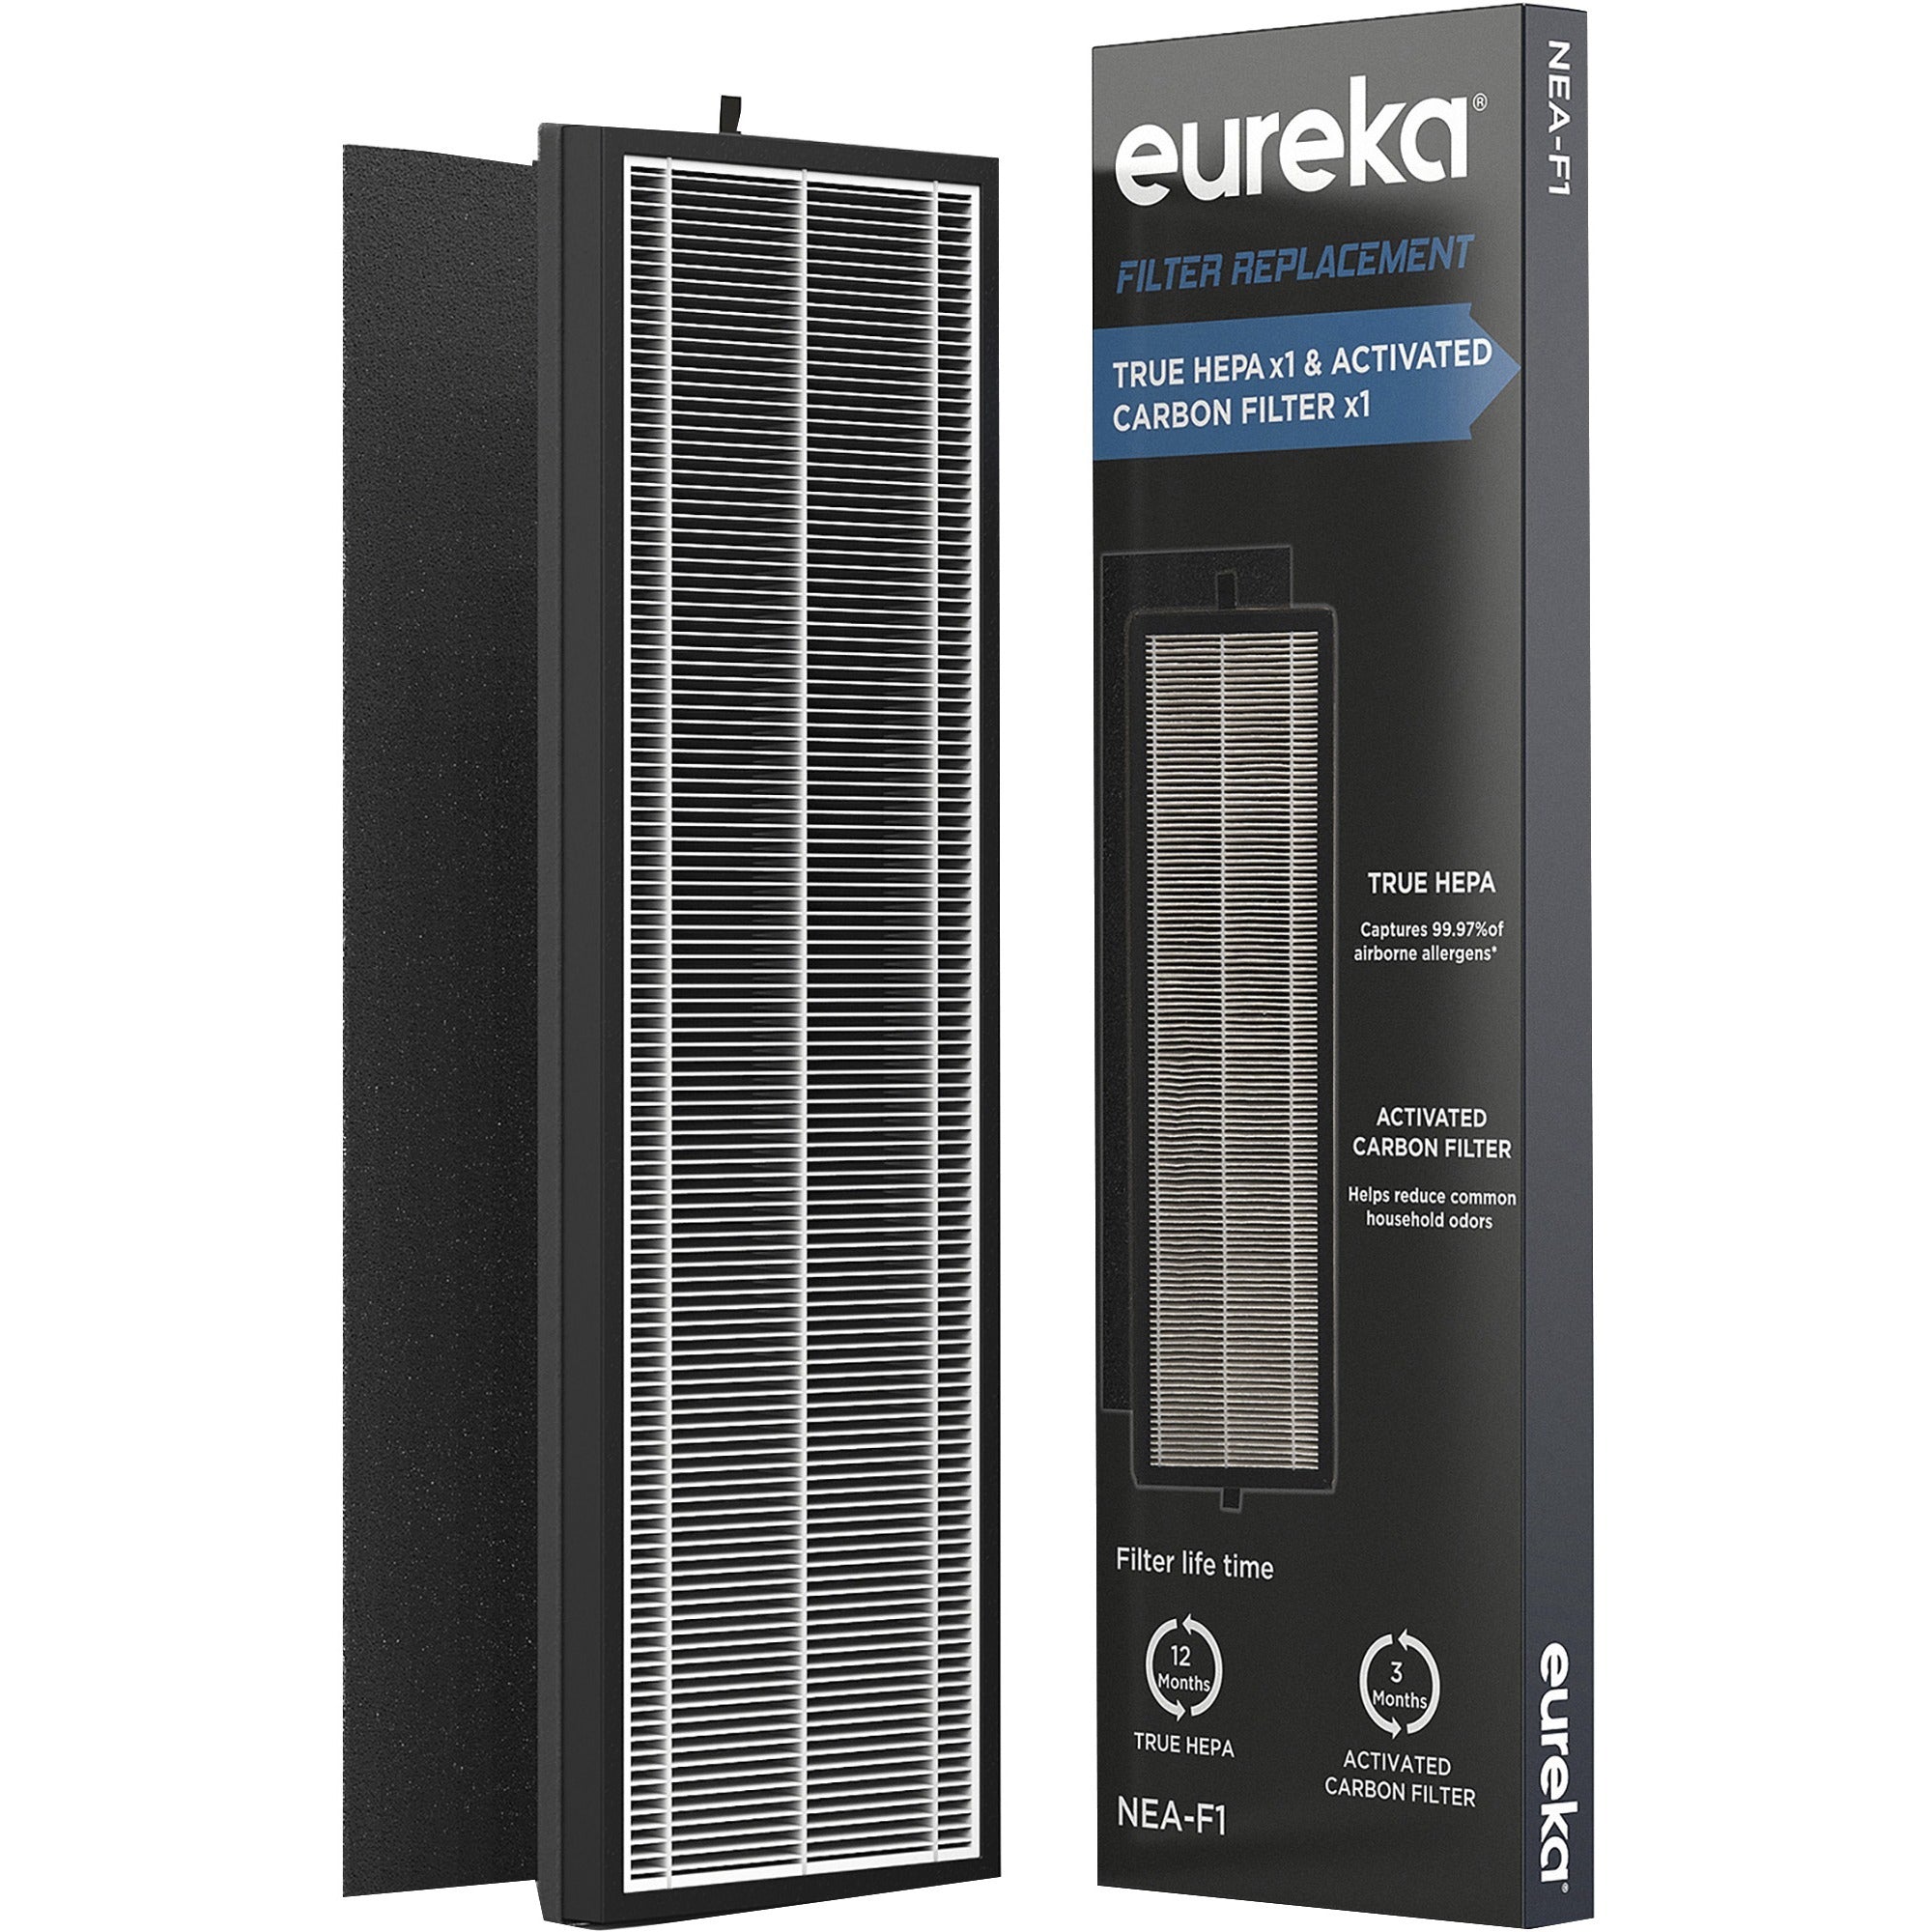 eureka-air-3-in-1-air-purifier-replacement-filter_neaf1 - 1